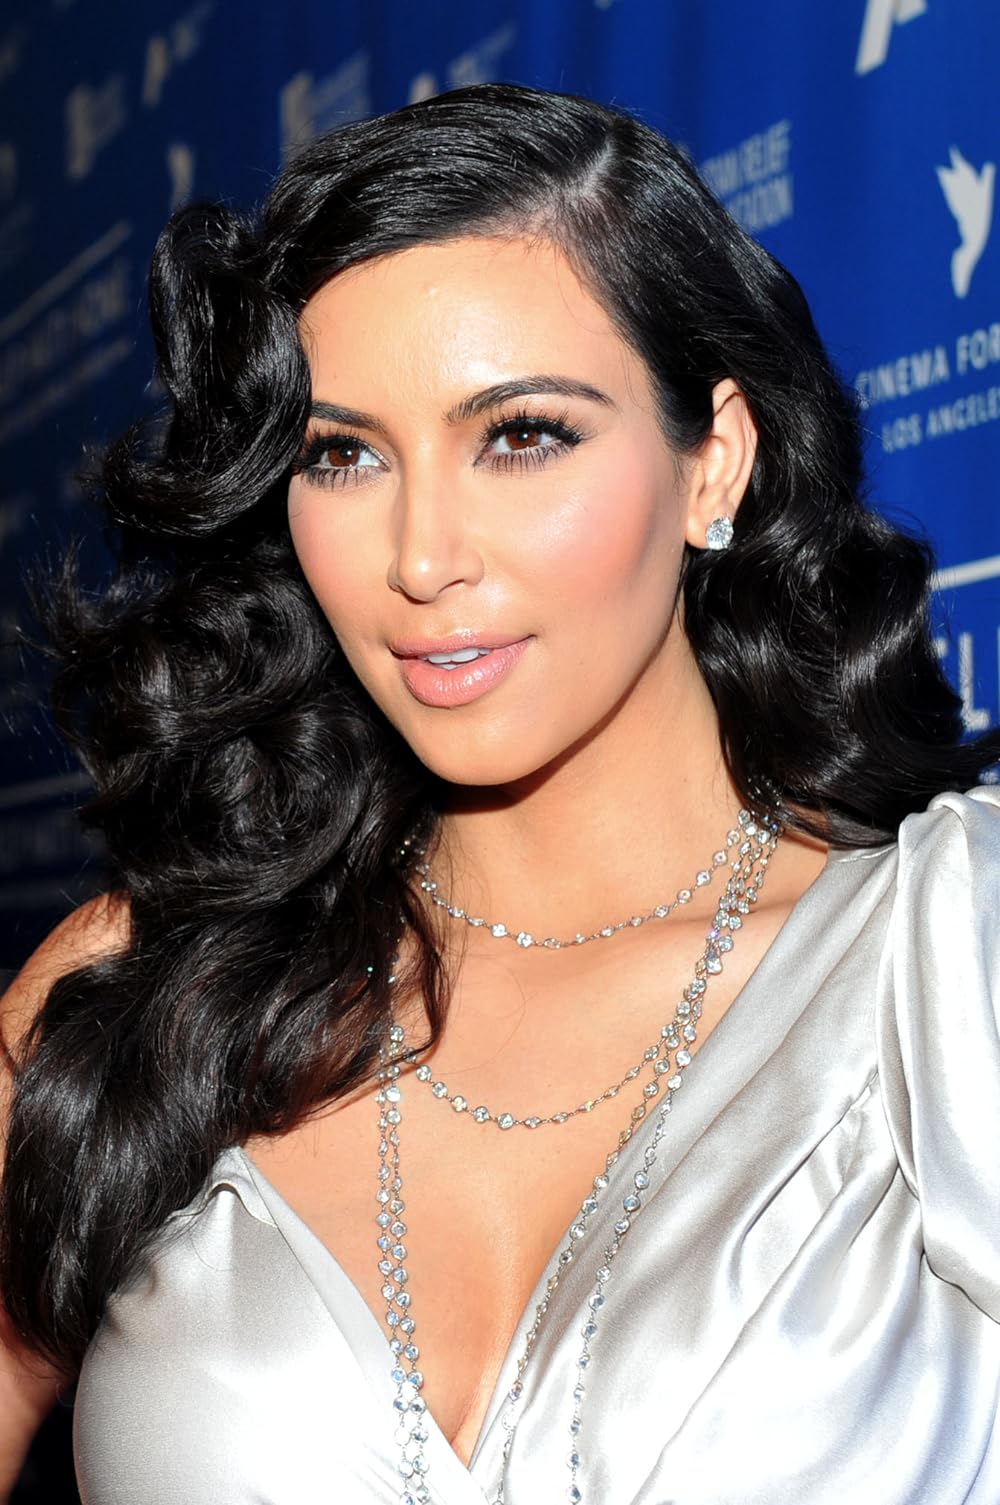 brian pelaez recommends Kim Kardashian Full Video Free